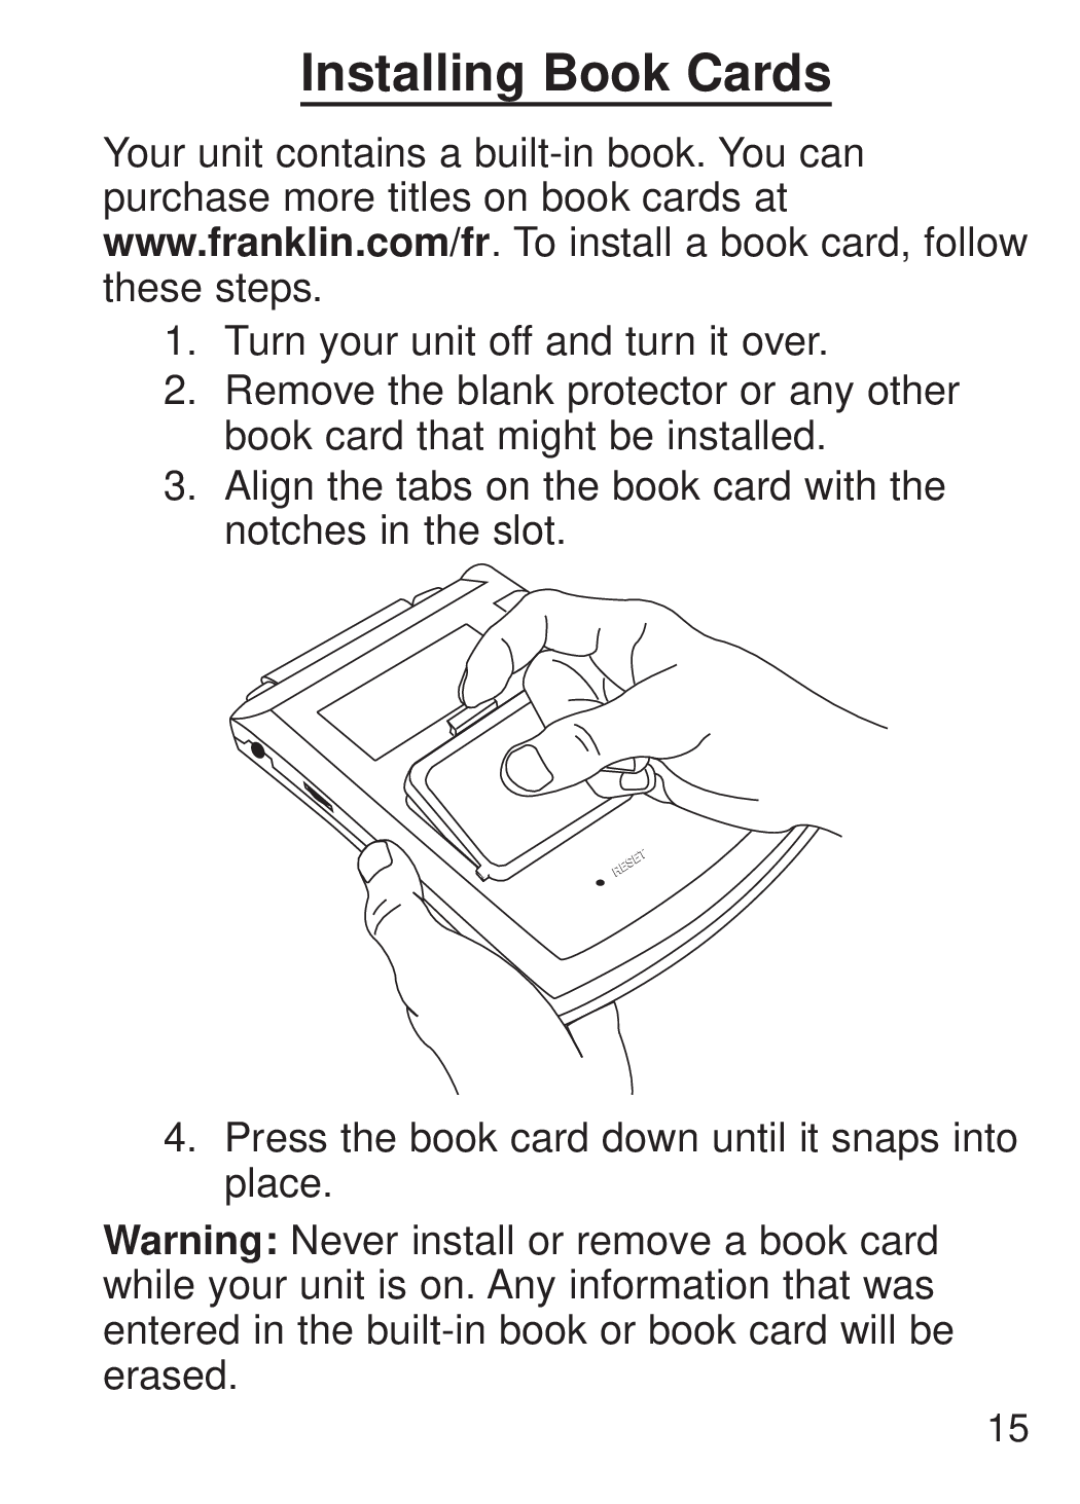 Franklin FQS-1870 manual Installing Book Cards 